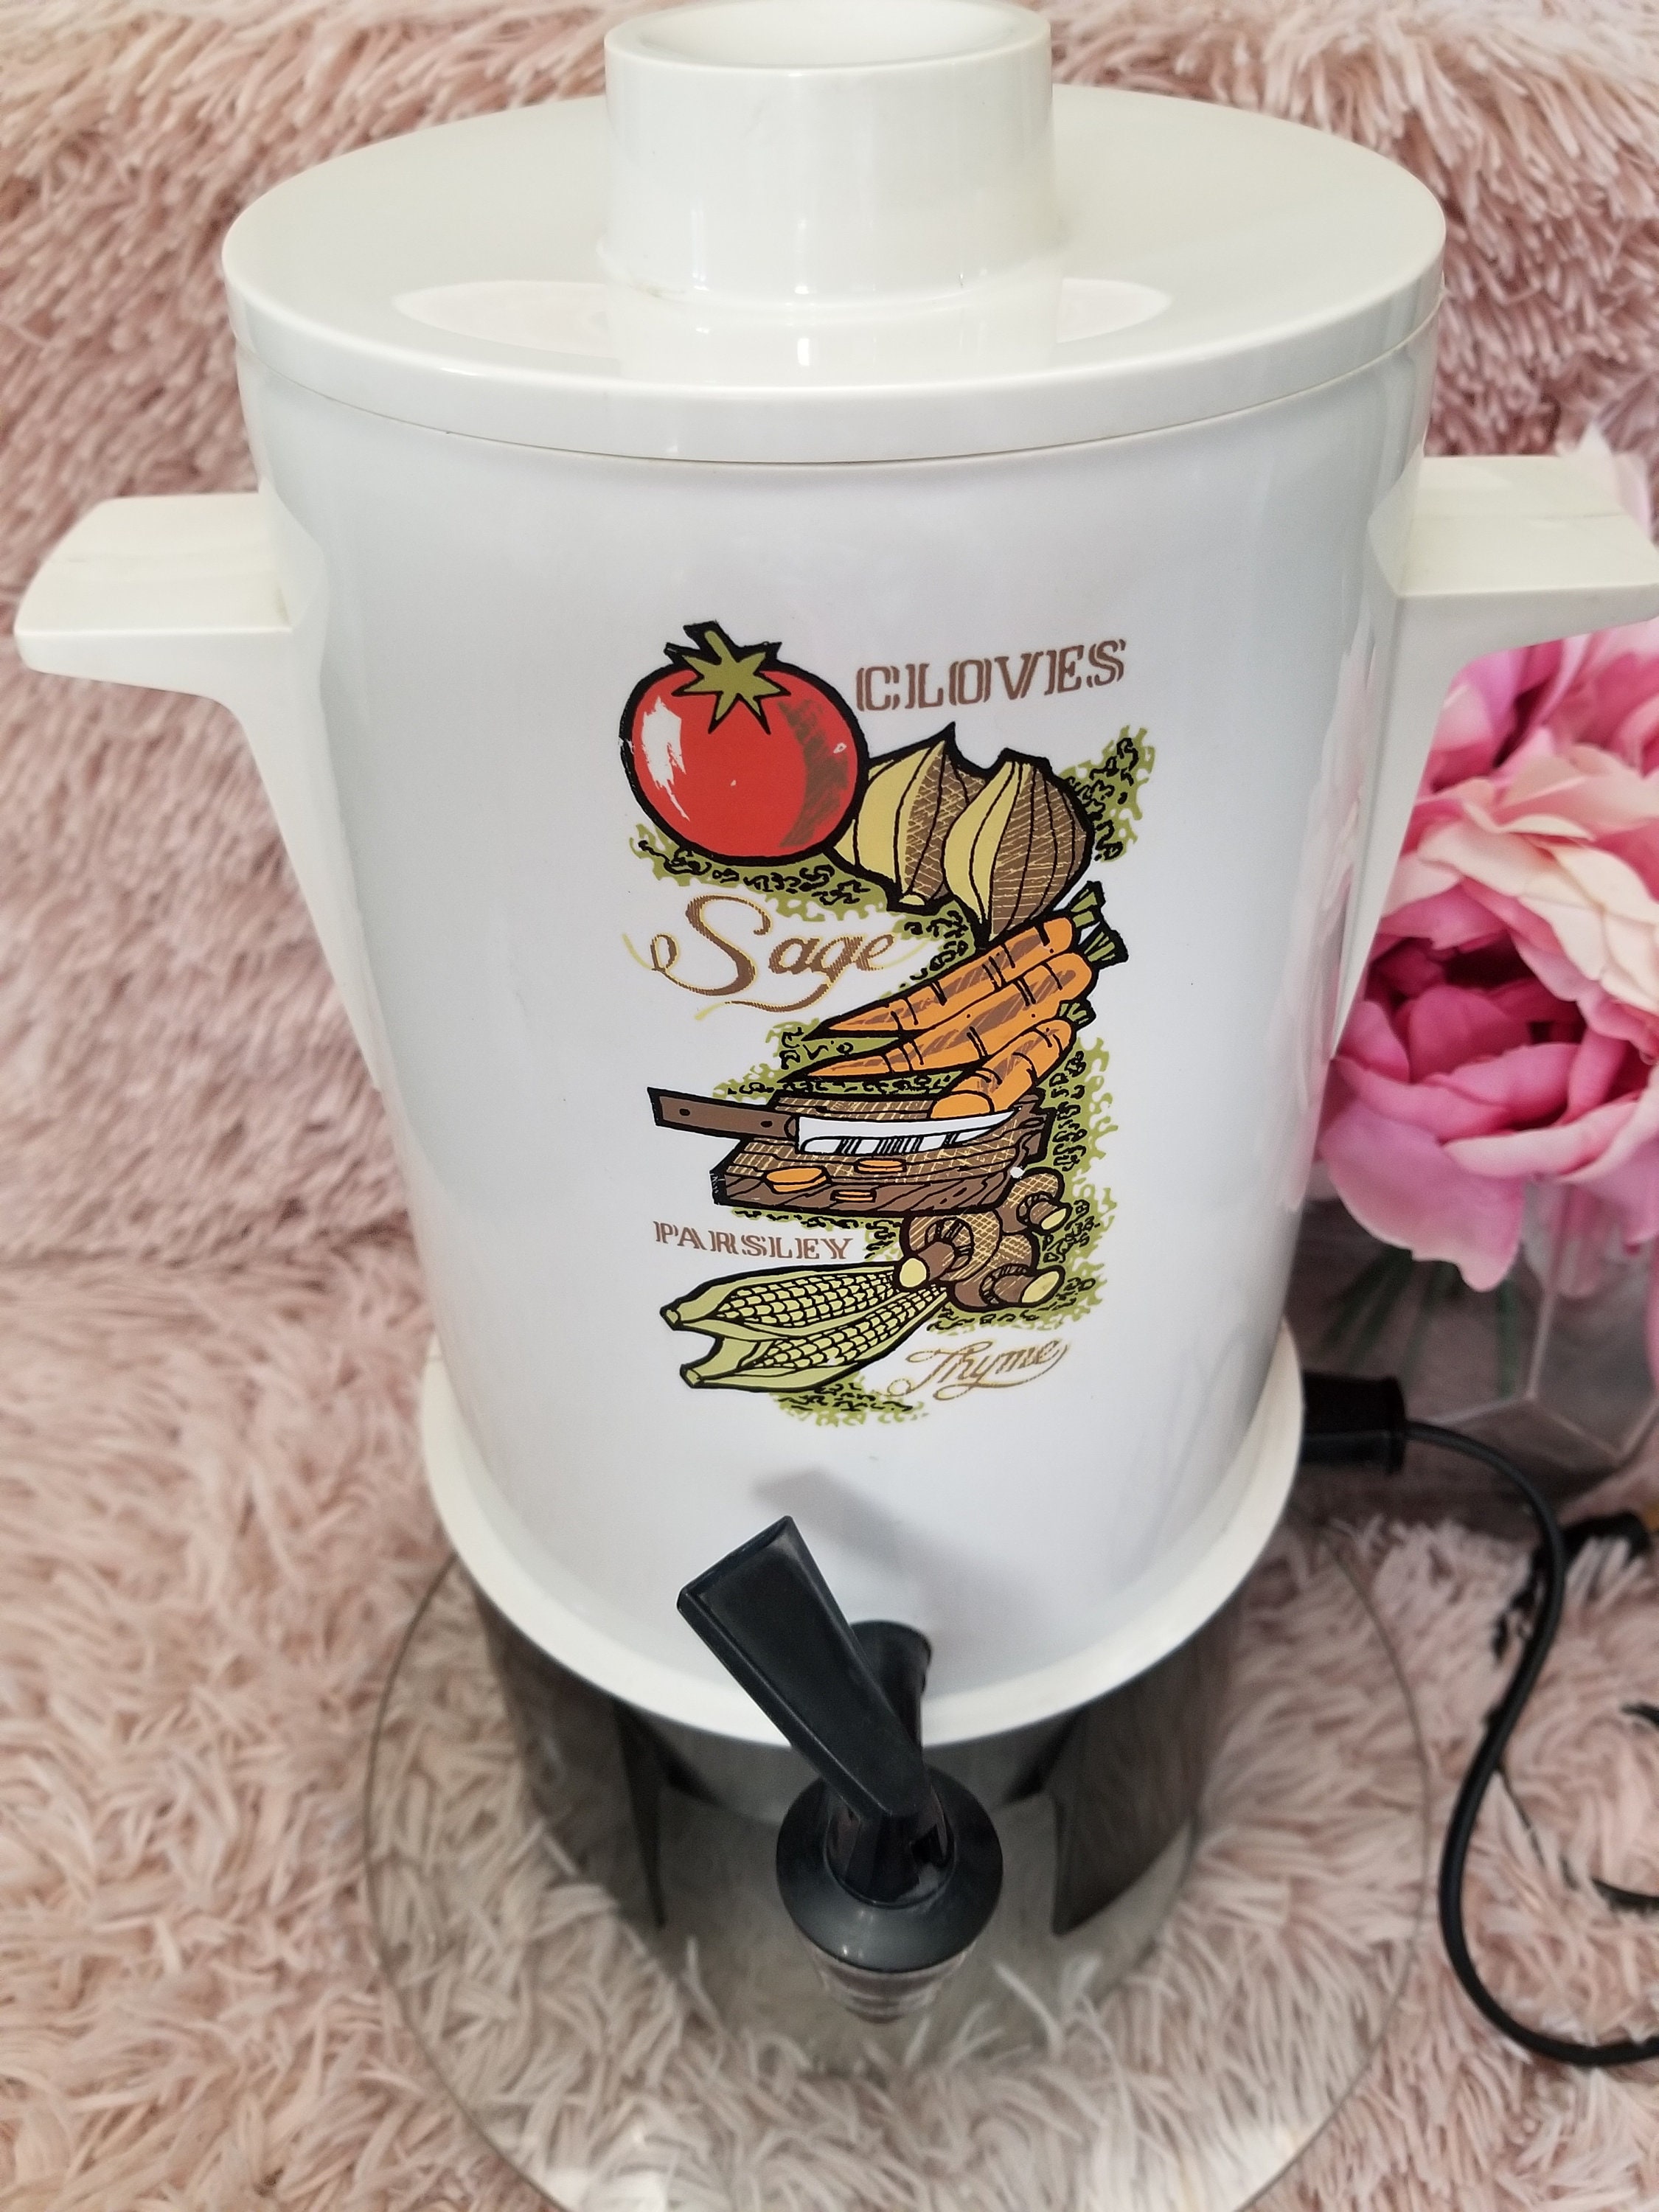 Retro Sunbeam CoffeeMaster 10 Cup Coffee Maker 70 s Vintage Harvest Gold  Flower